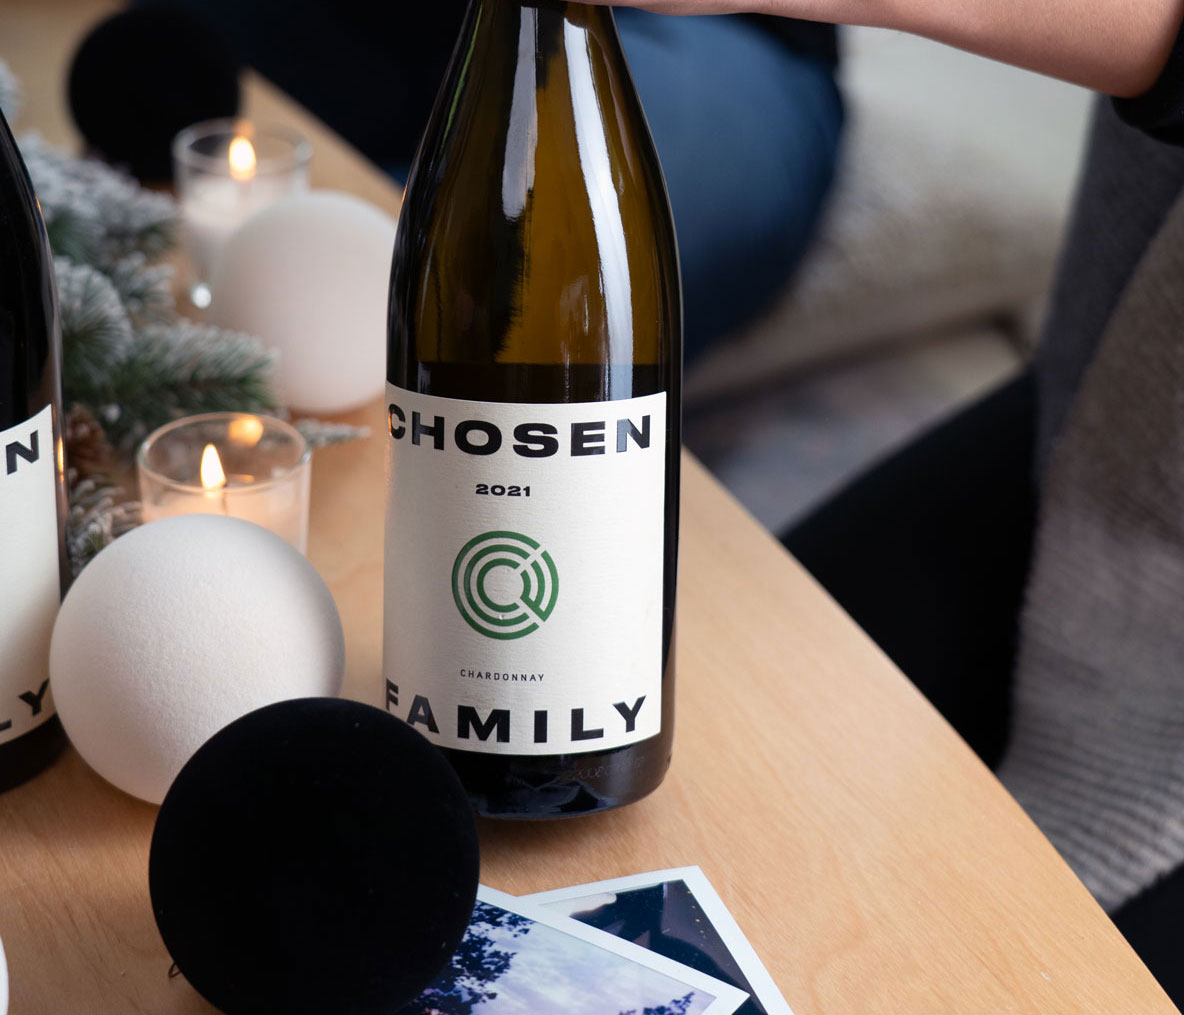 Chosen Chardonnay bottle on a tabletop